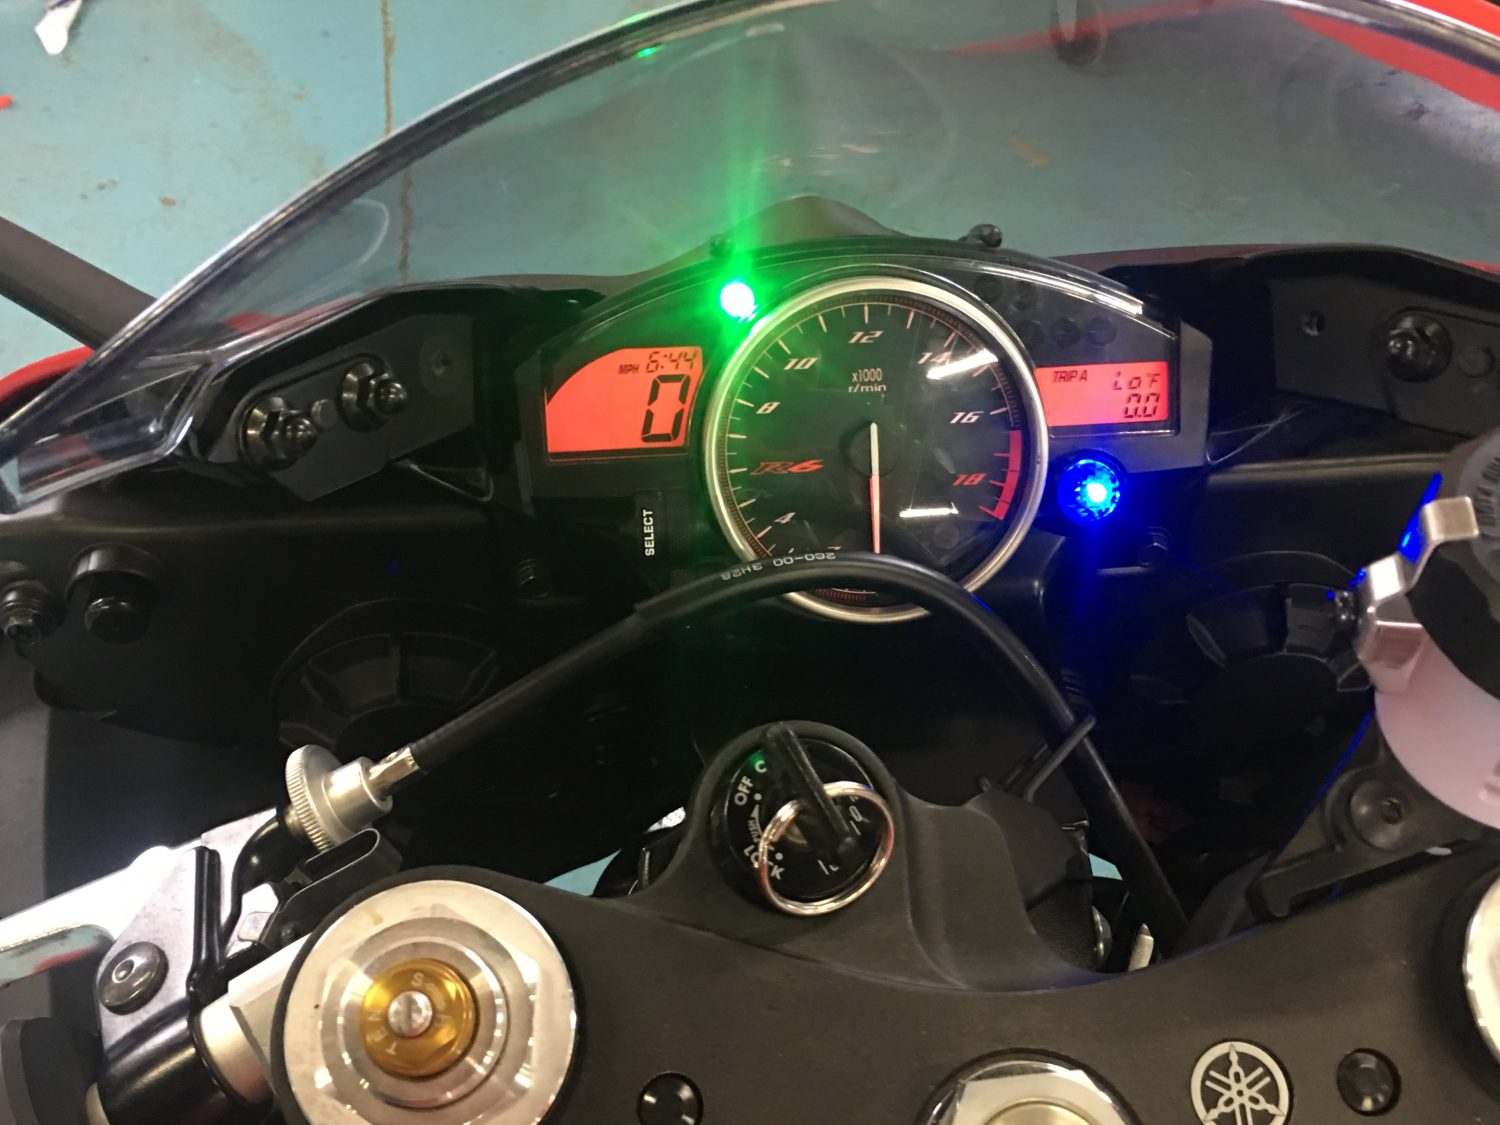 k40 radar detector alert led's on motorcycle Yamaha YZF R6